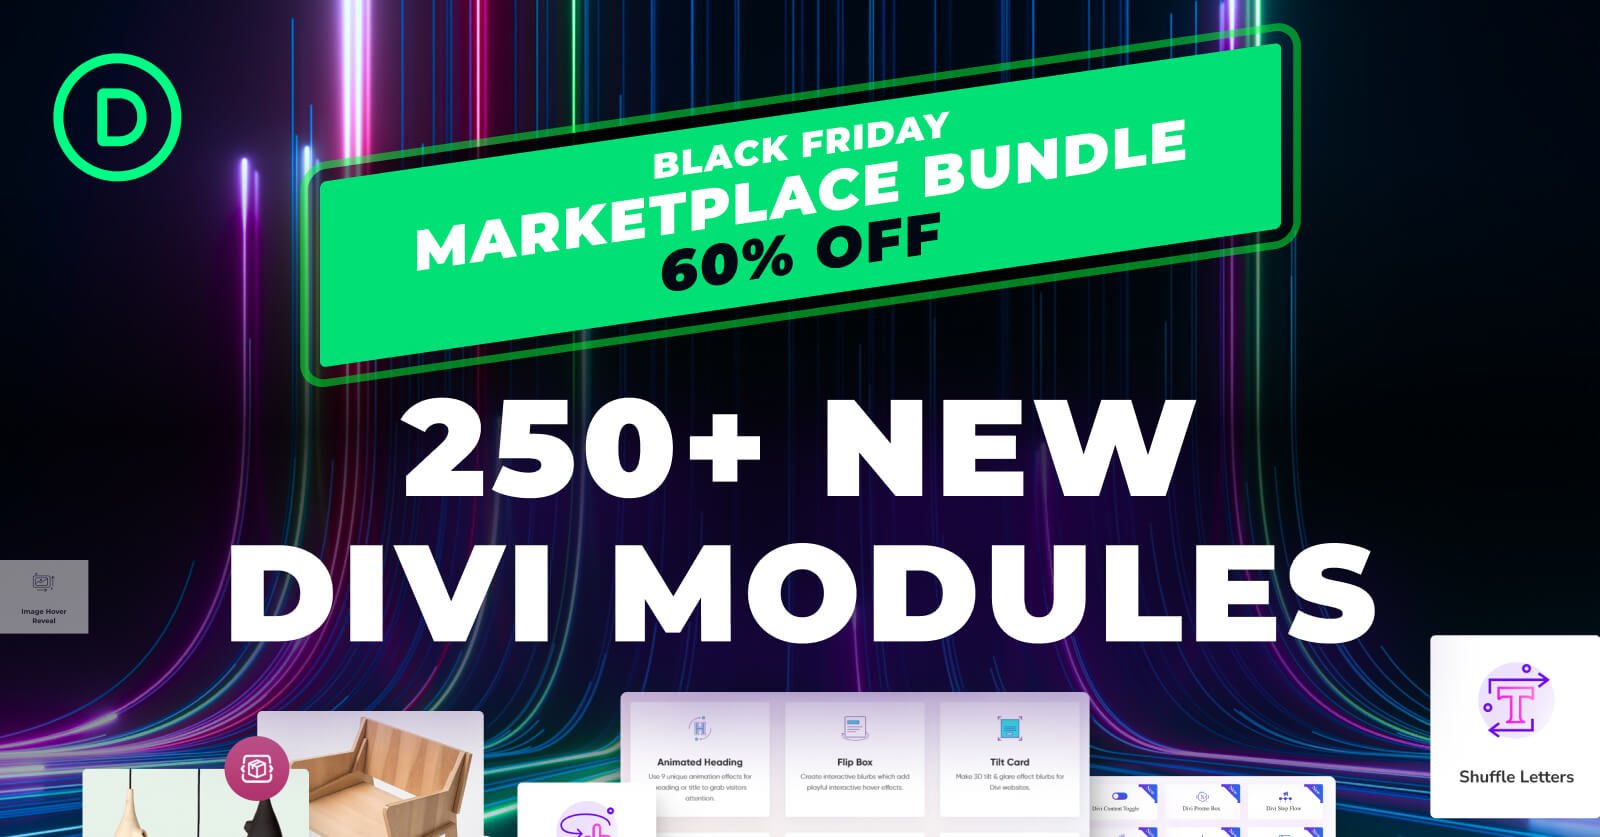 Black Friday 250+ new Divi modules